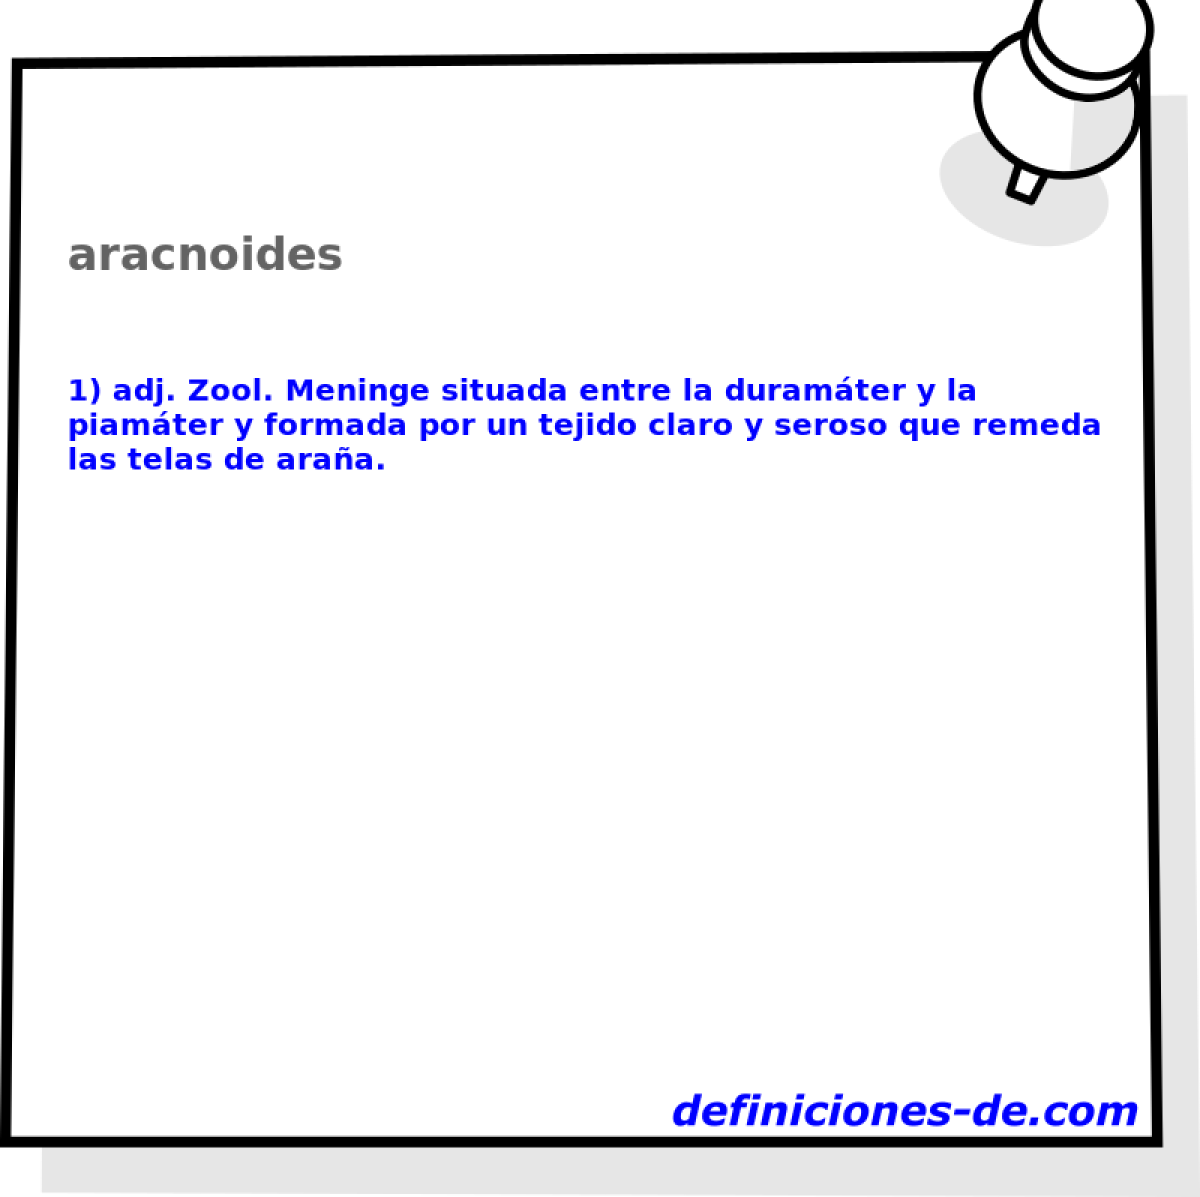 aracnoides 